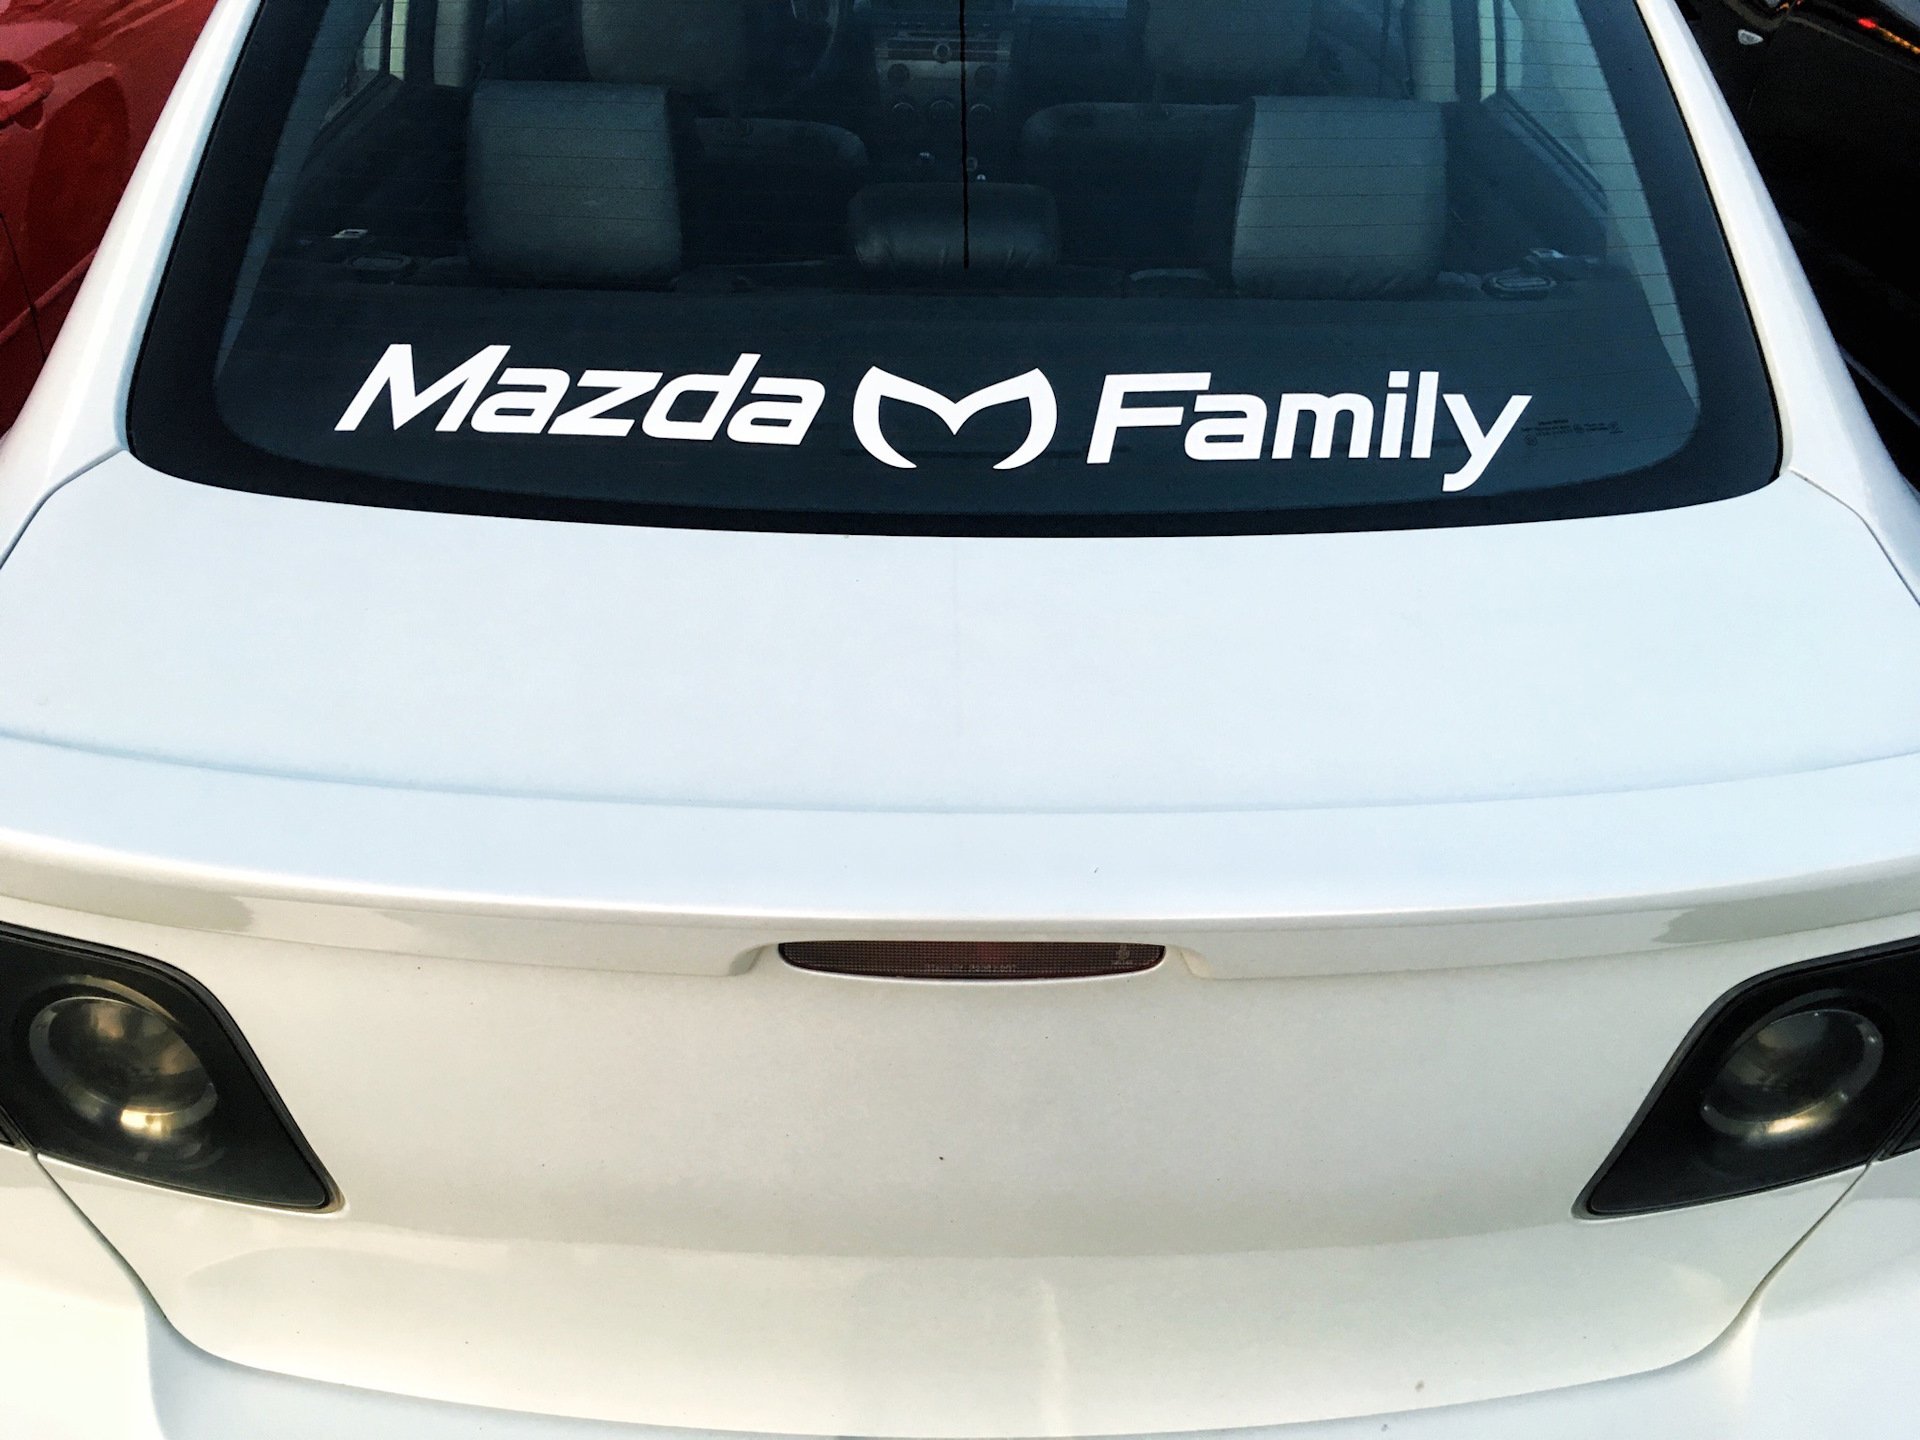 Mazda family. Мазда Фэмили. Мазда Family 99. Мазда Фэмили наклейка. Наклейки Мазда фамилия.